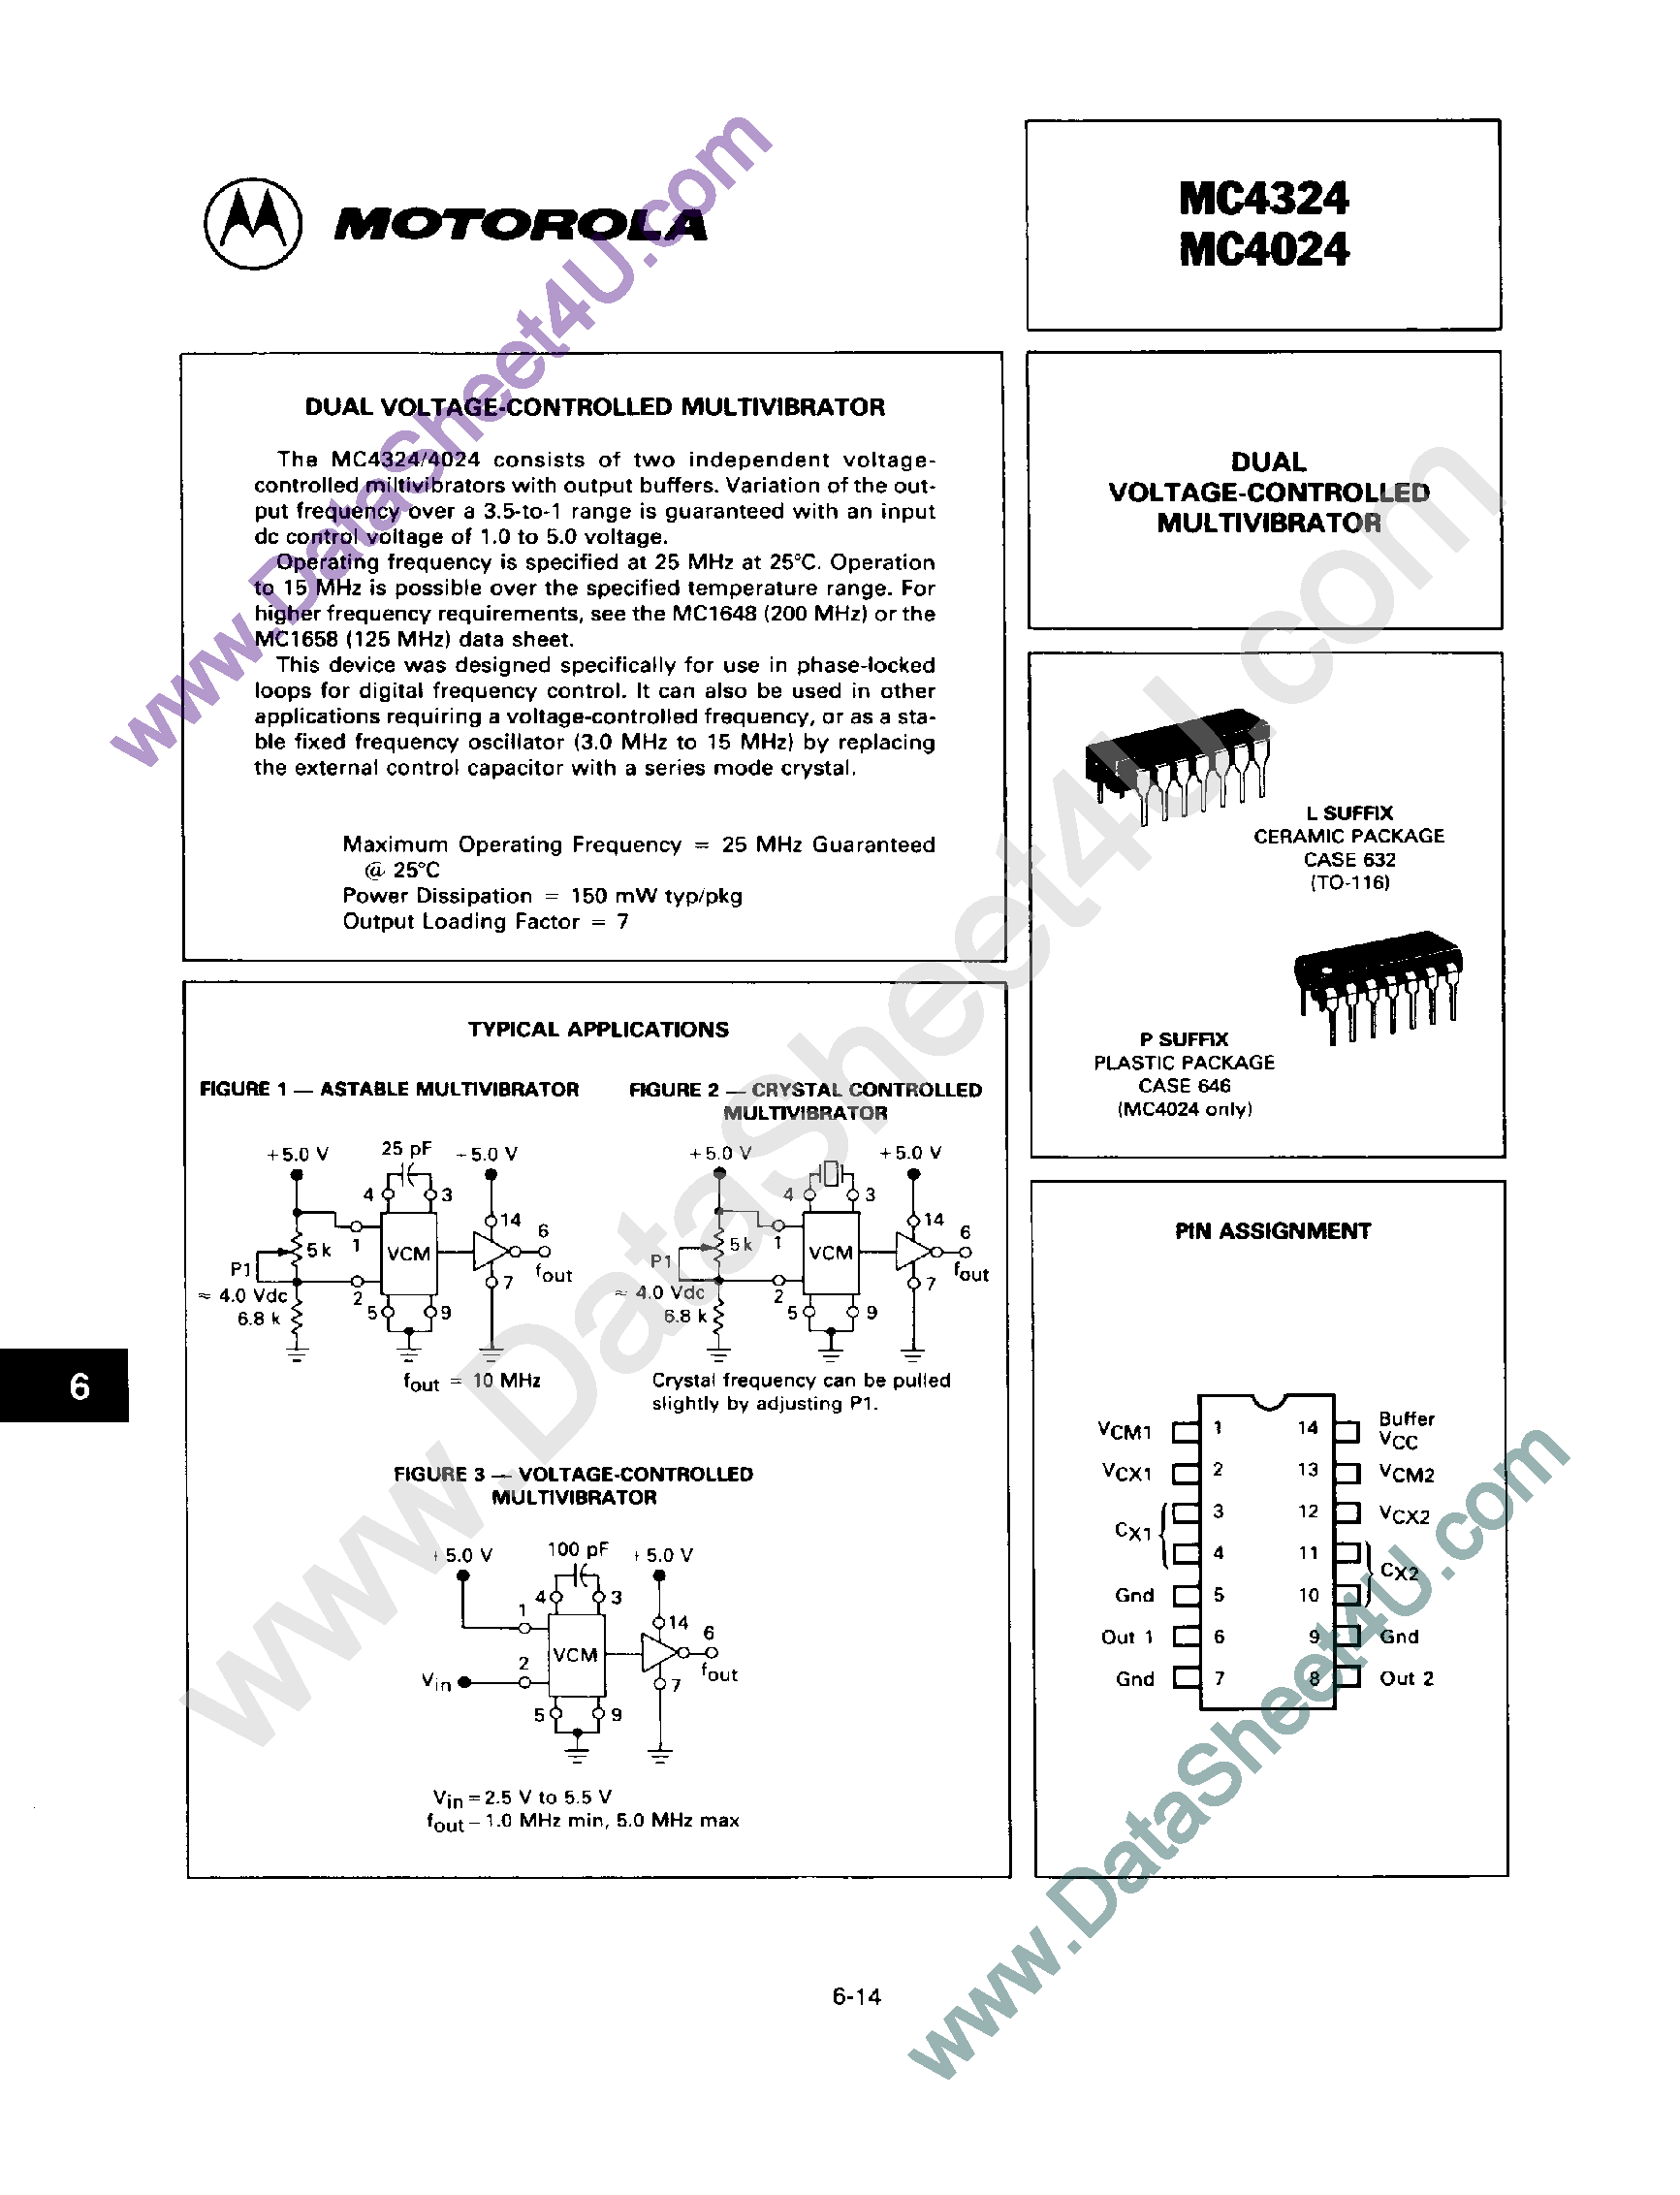 Даташит MC4024 - (MC4024 / MC4324) Dual Voltage Controlled Multivibartor страница 1